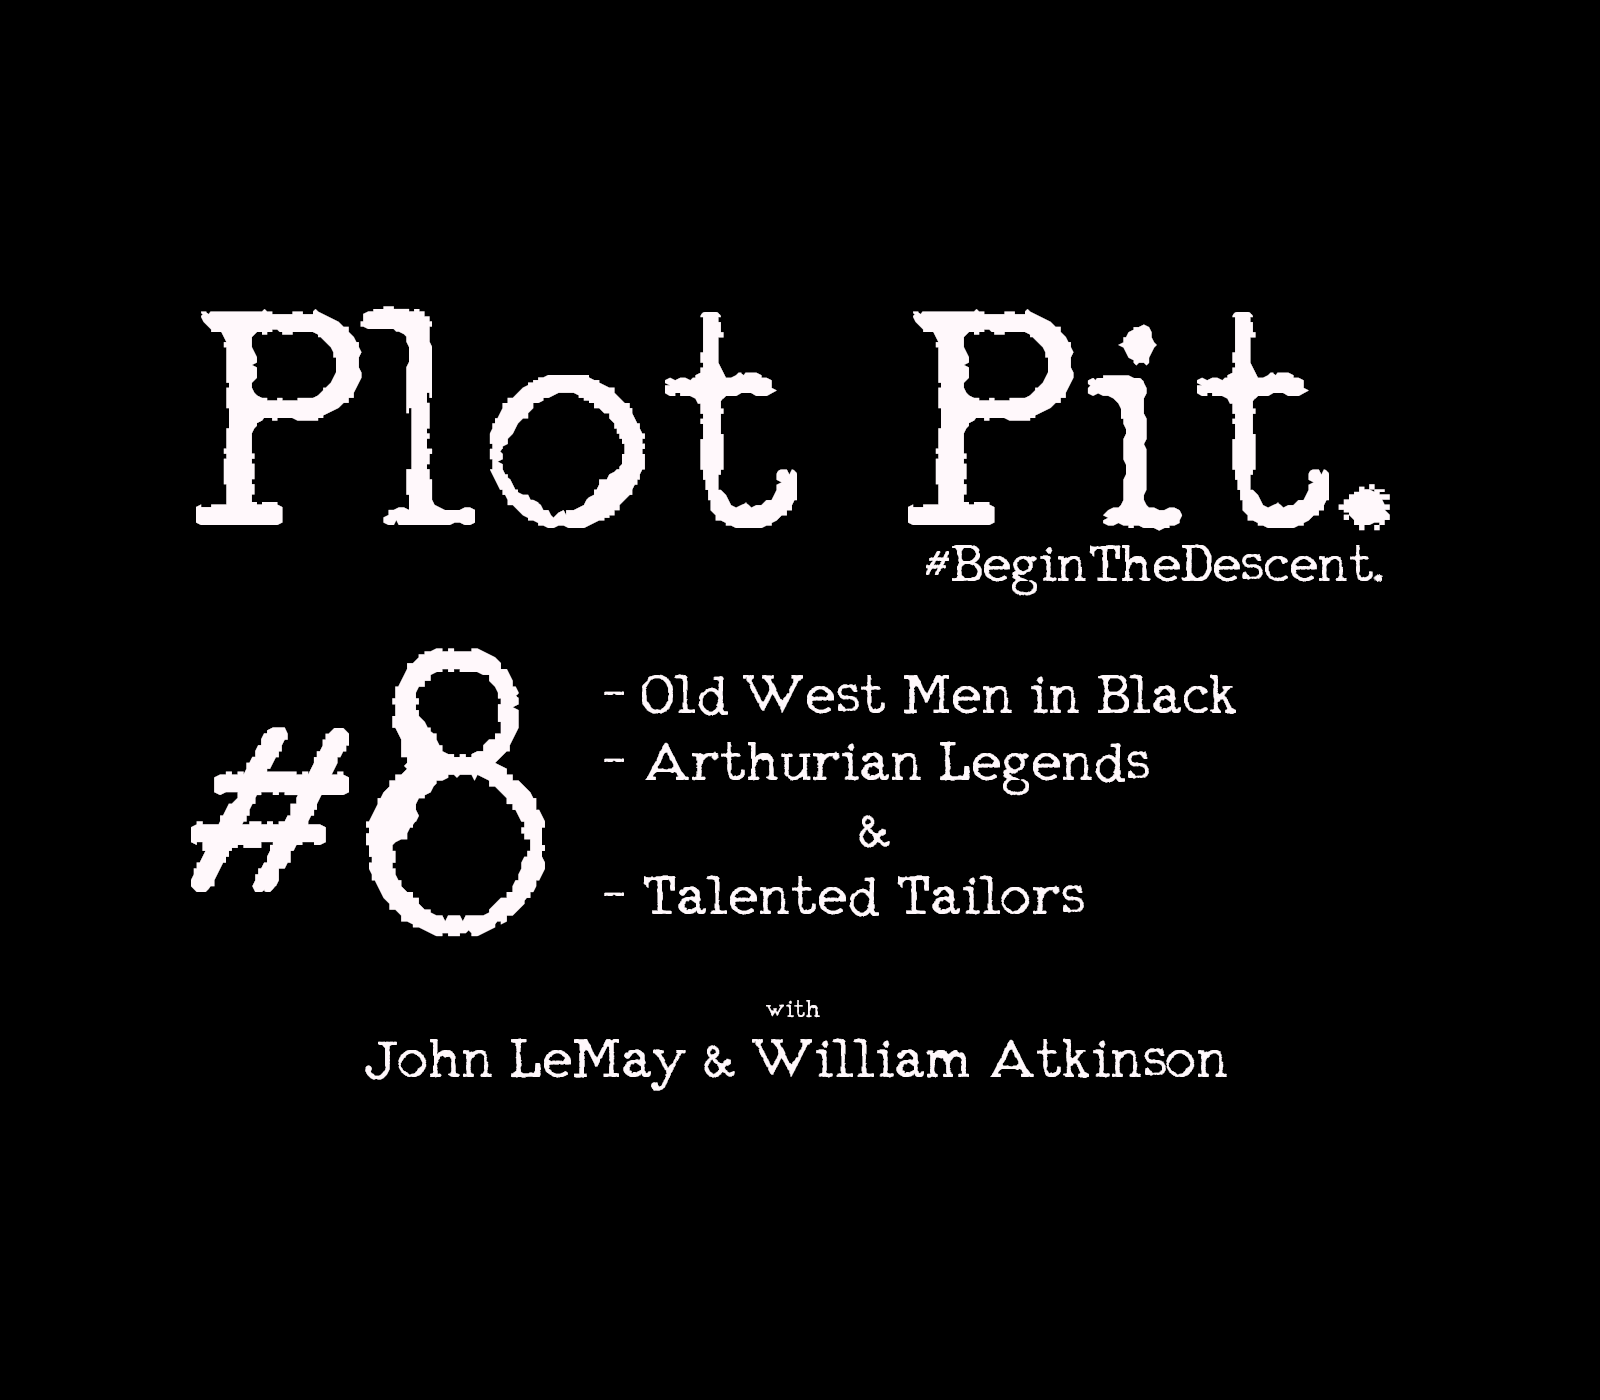 Old West Men in Black, Arthurian Legends & Talented Tailors